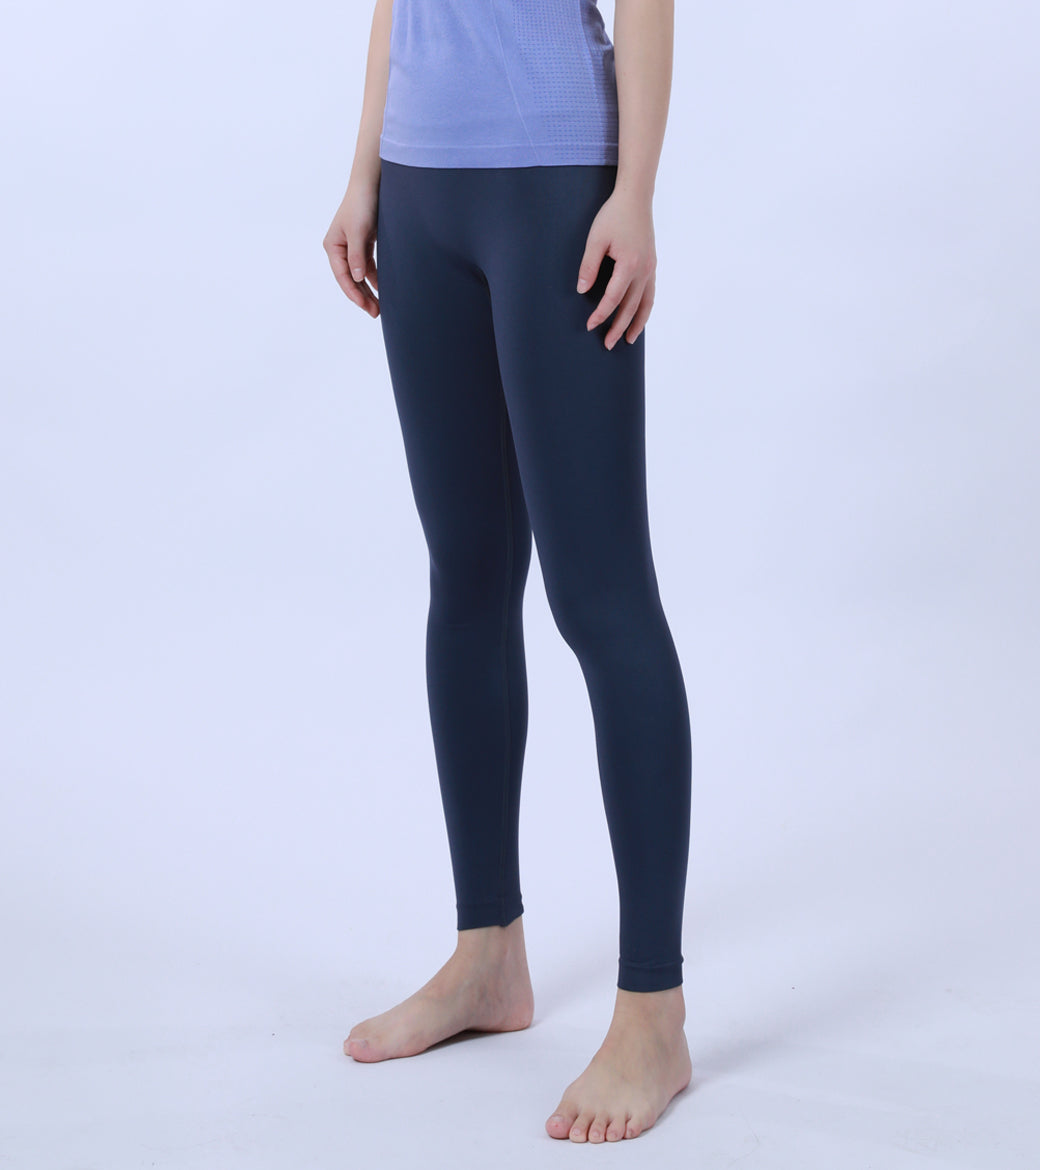 LOVESOFT Joggers Pants Seamless Leggings for Women Yoga Workout Tight Pants